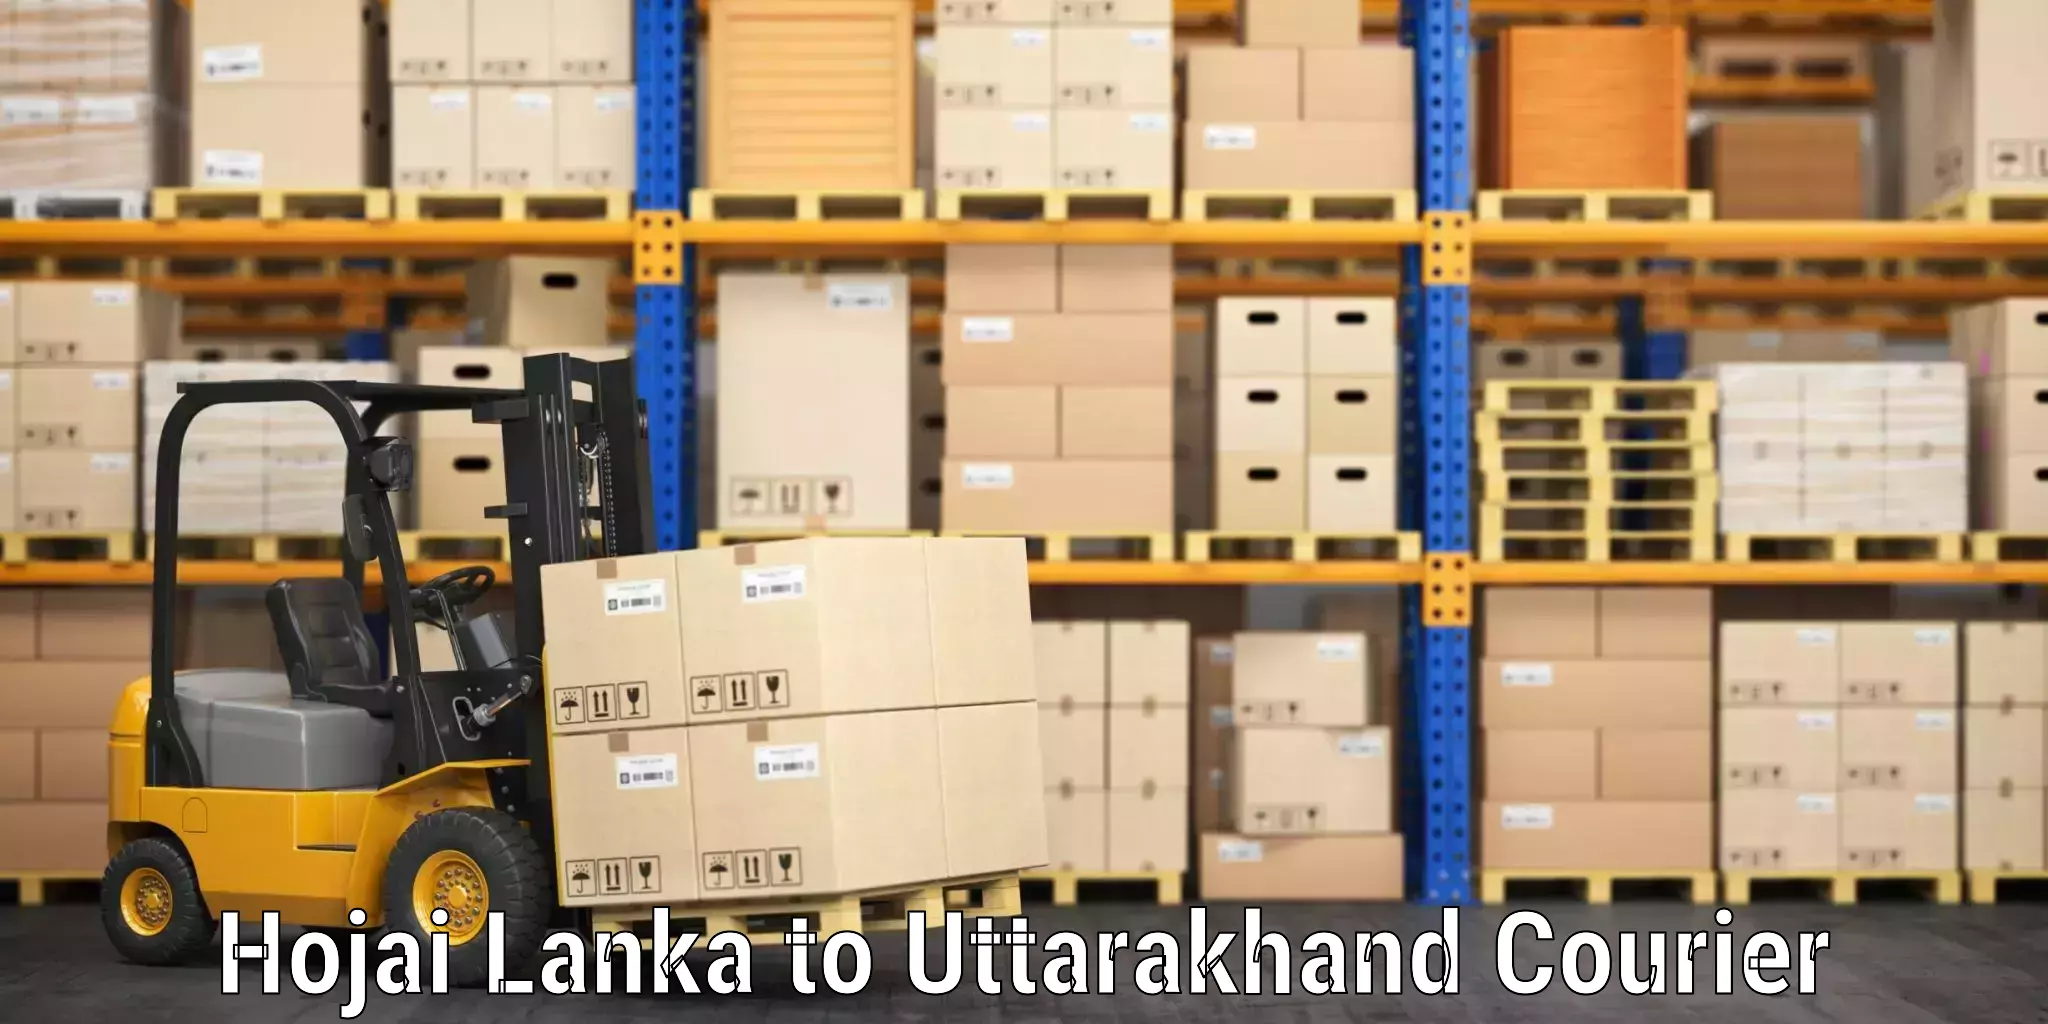 Luggage shipping service Hojai Lanka to Mussoorie